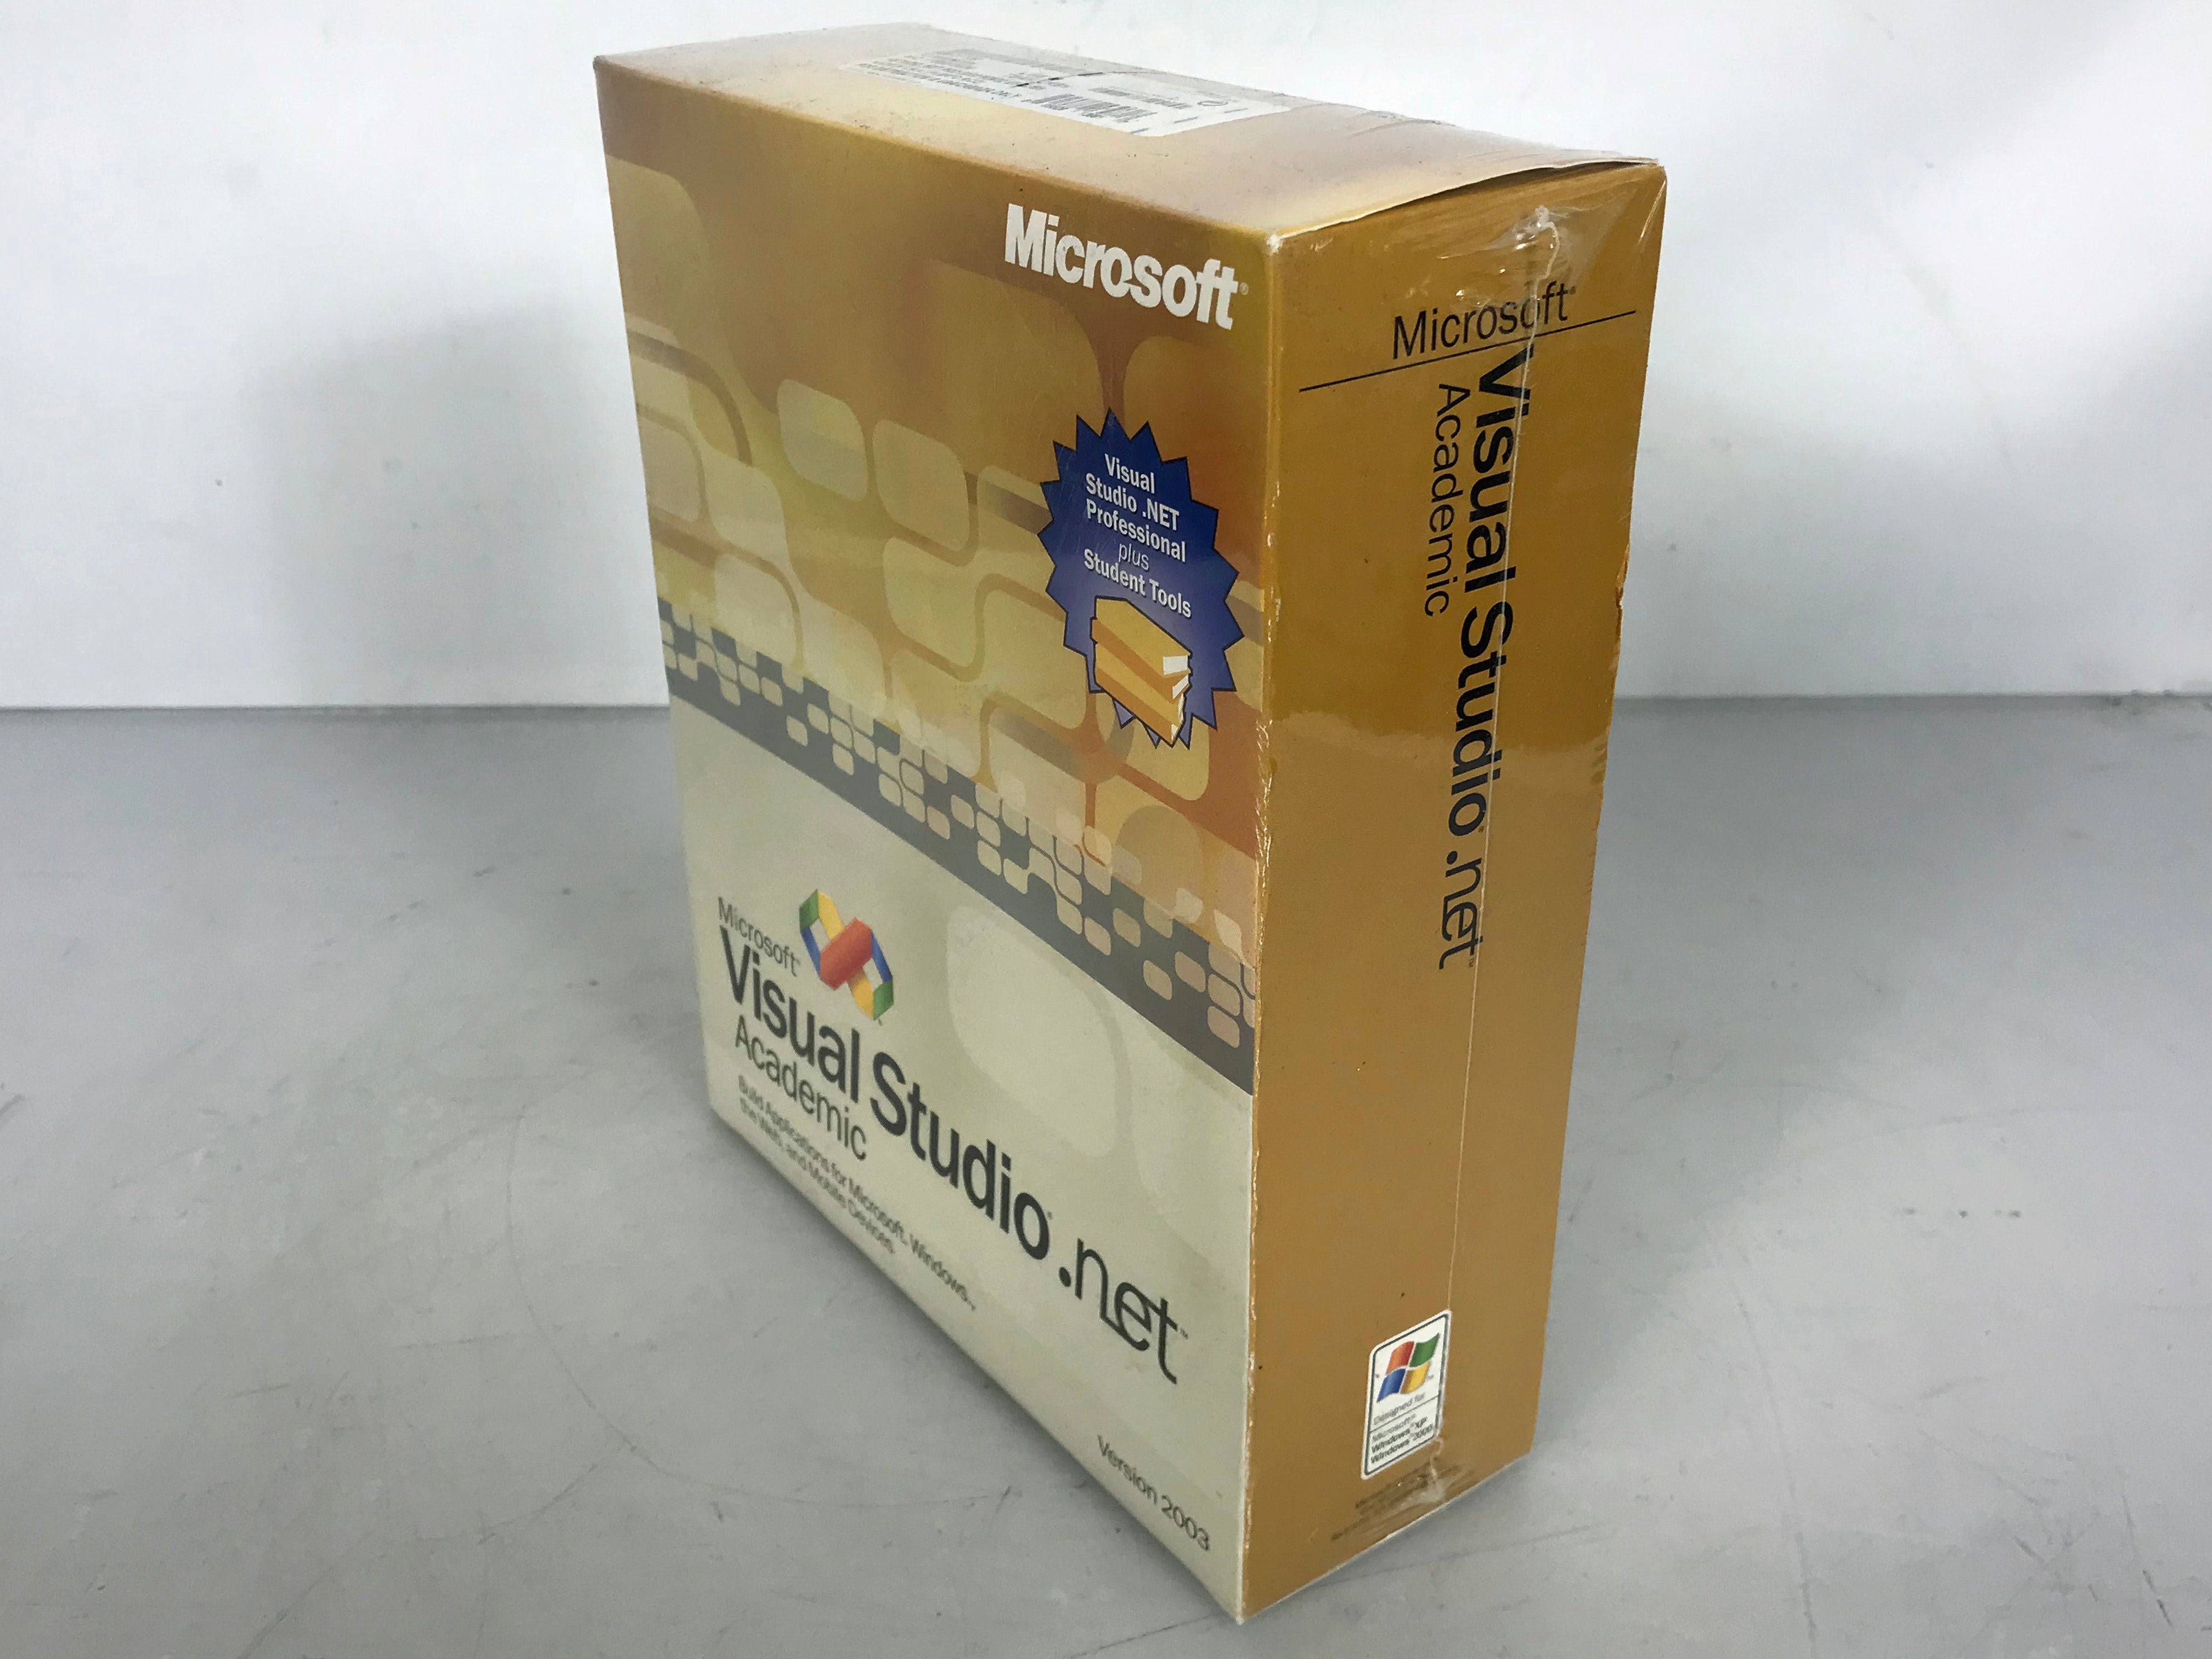 Microsoft Visual Studio.Net Academic Version 2003